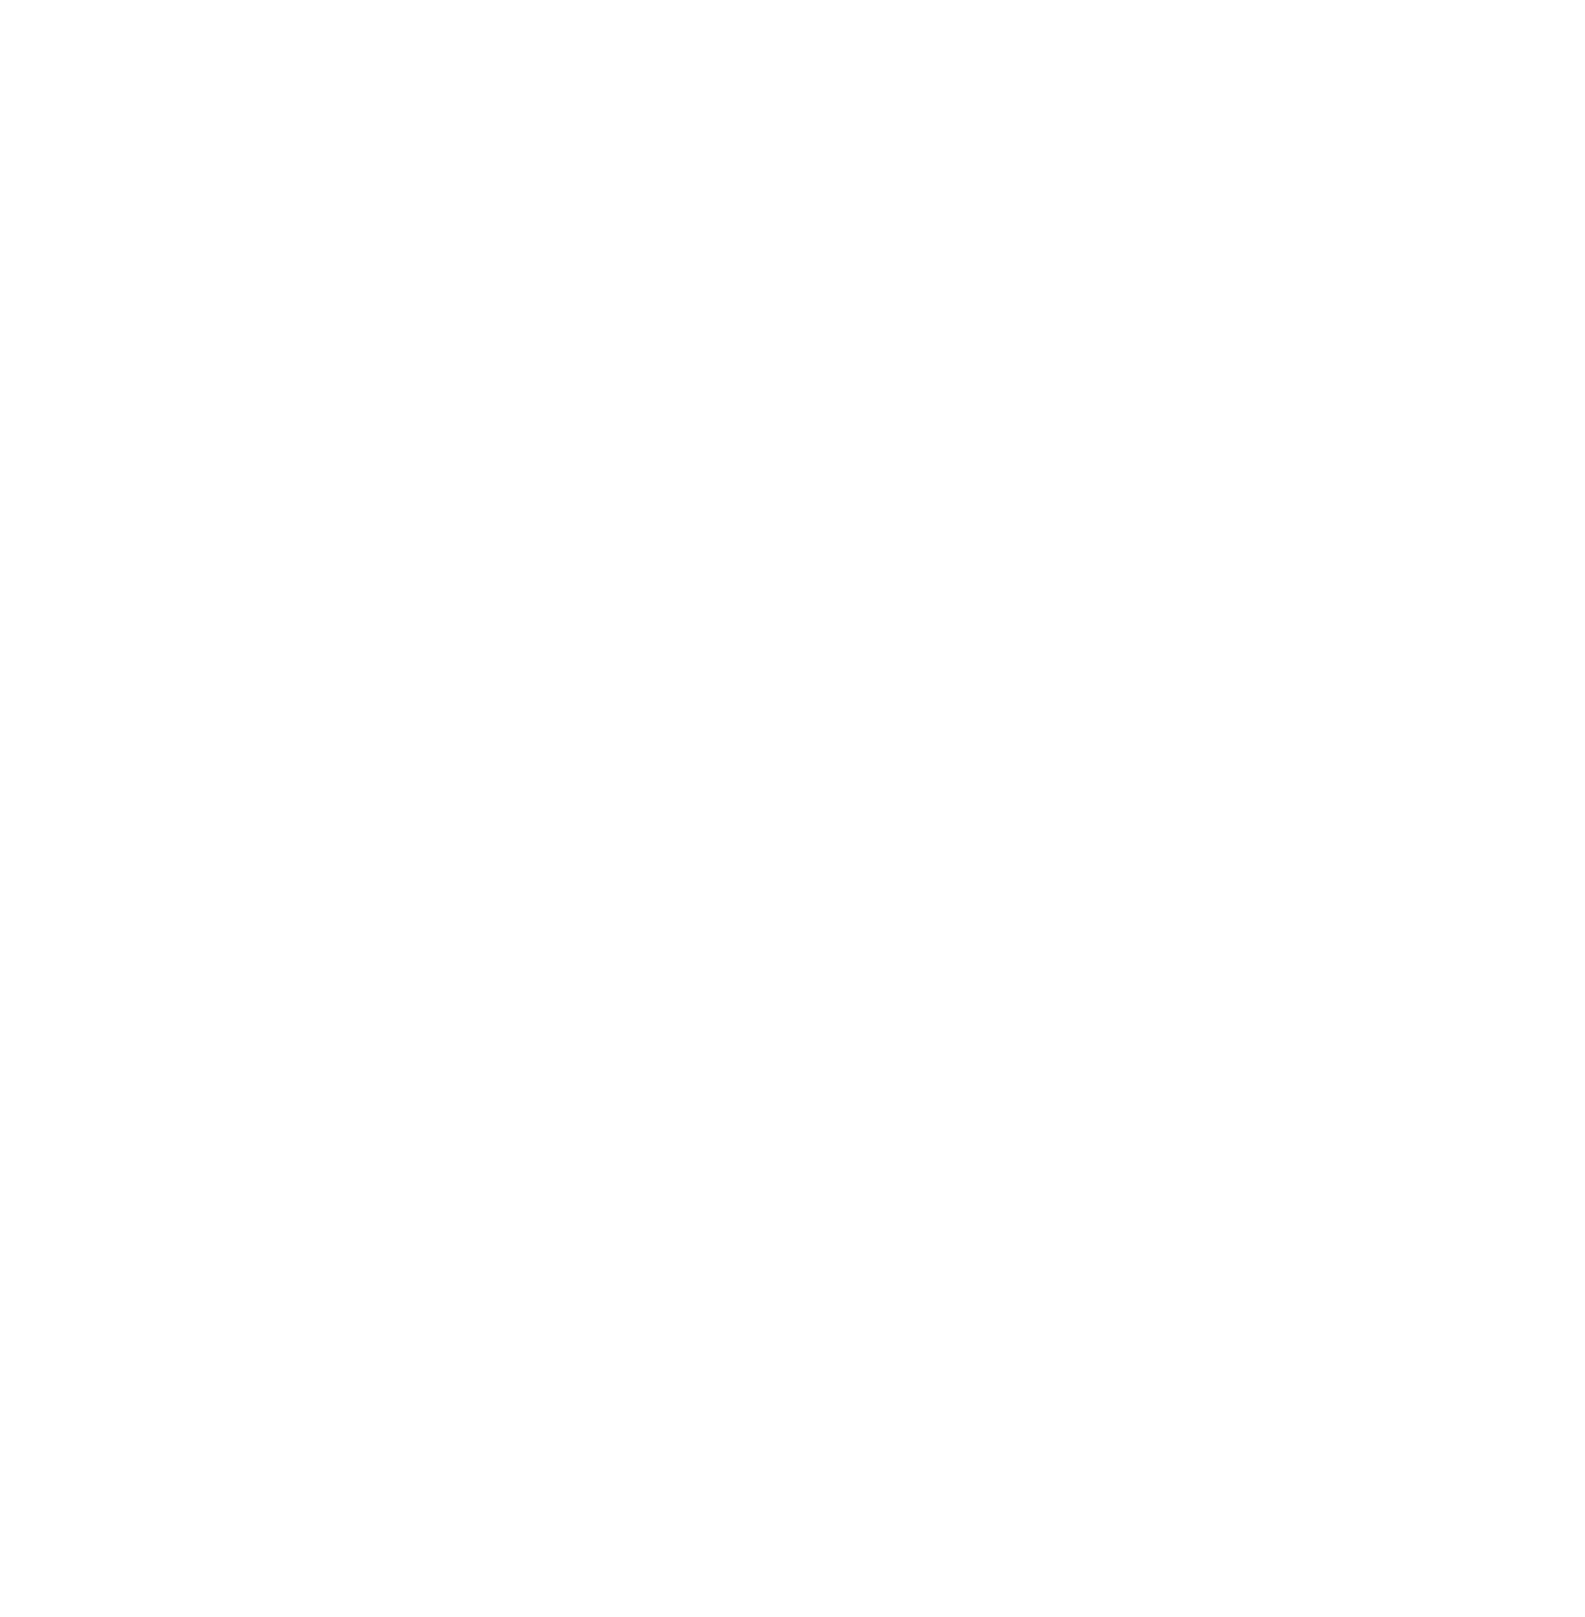 Southern Copper logo for dark backgrounds (transparent PNG)